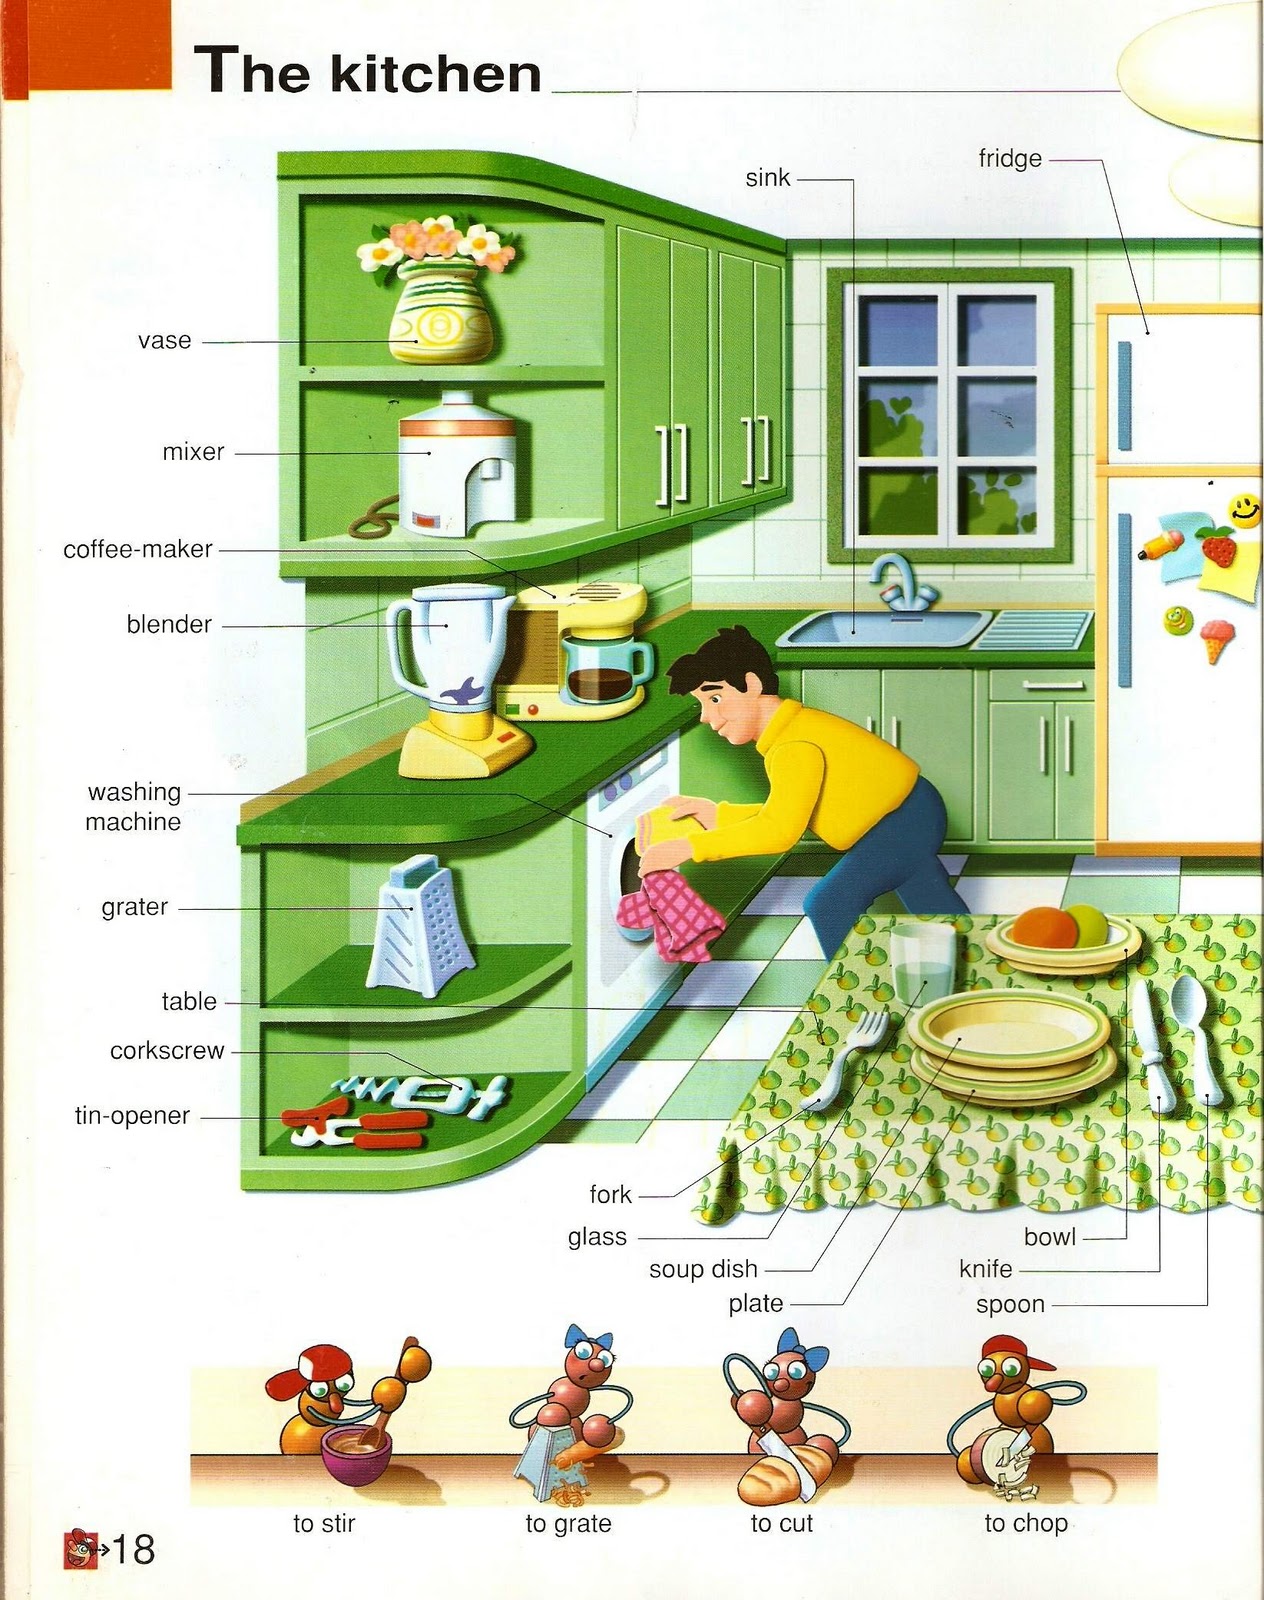 Кухня перевести на английский. Тема кухня на английском. Мебель кухни на английском языке. Кухонная мебель по английскому языку. Кухня Vocabulary.